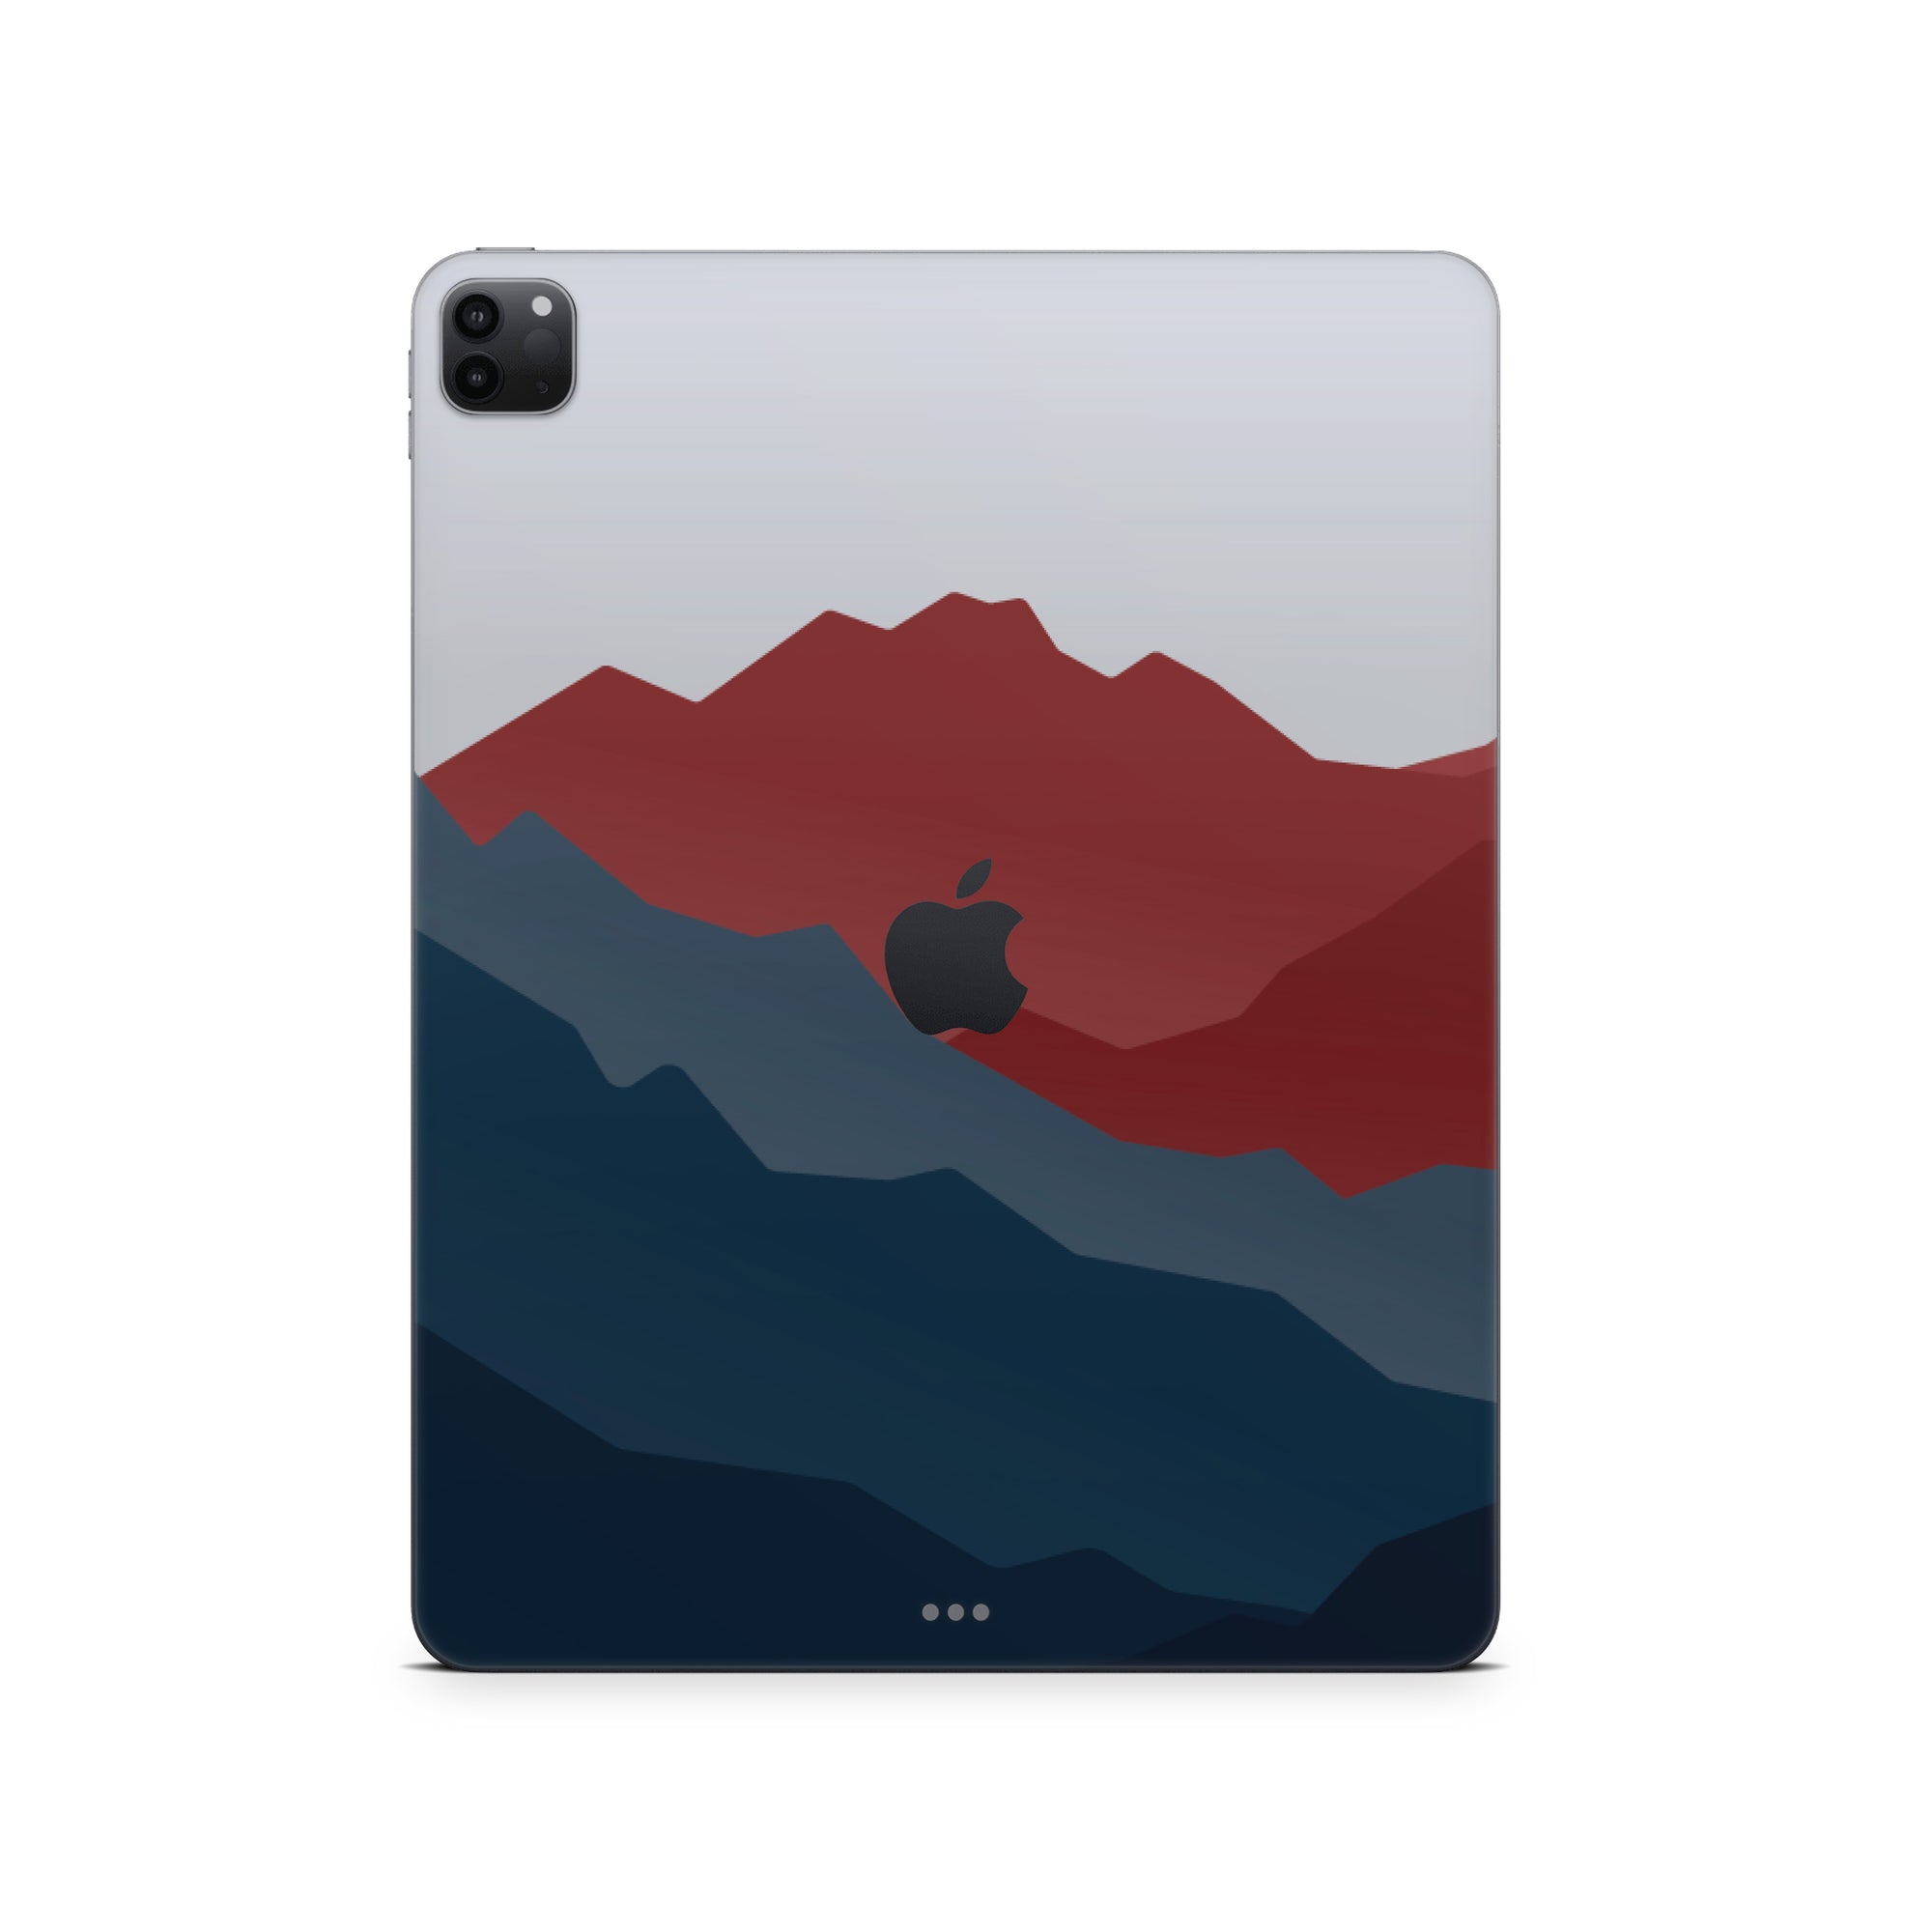 Parkscheiben %26 Skins iPad Cases & Skins for Sale